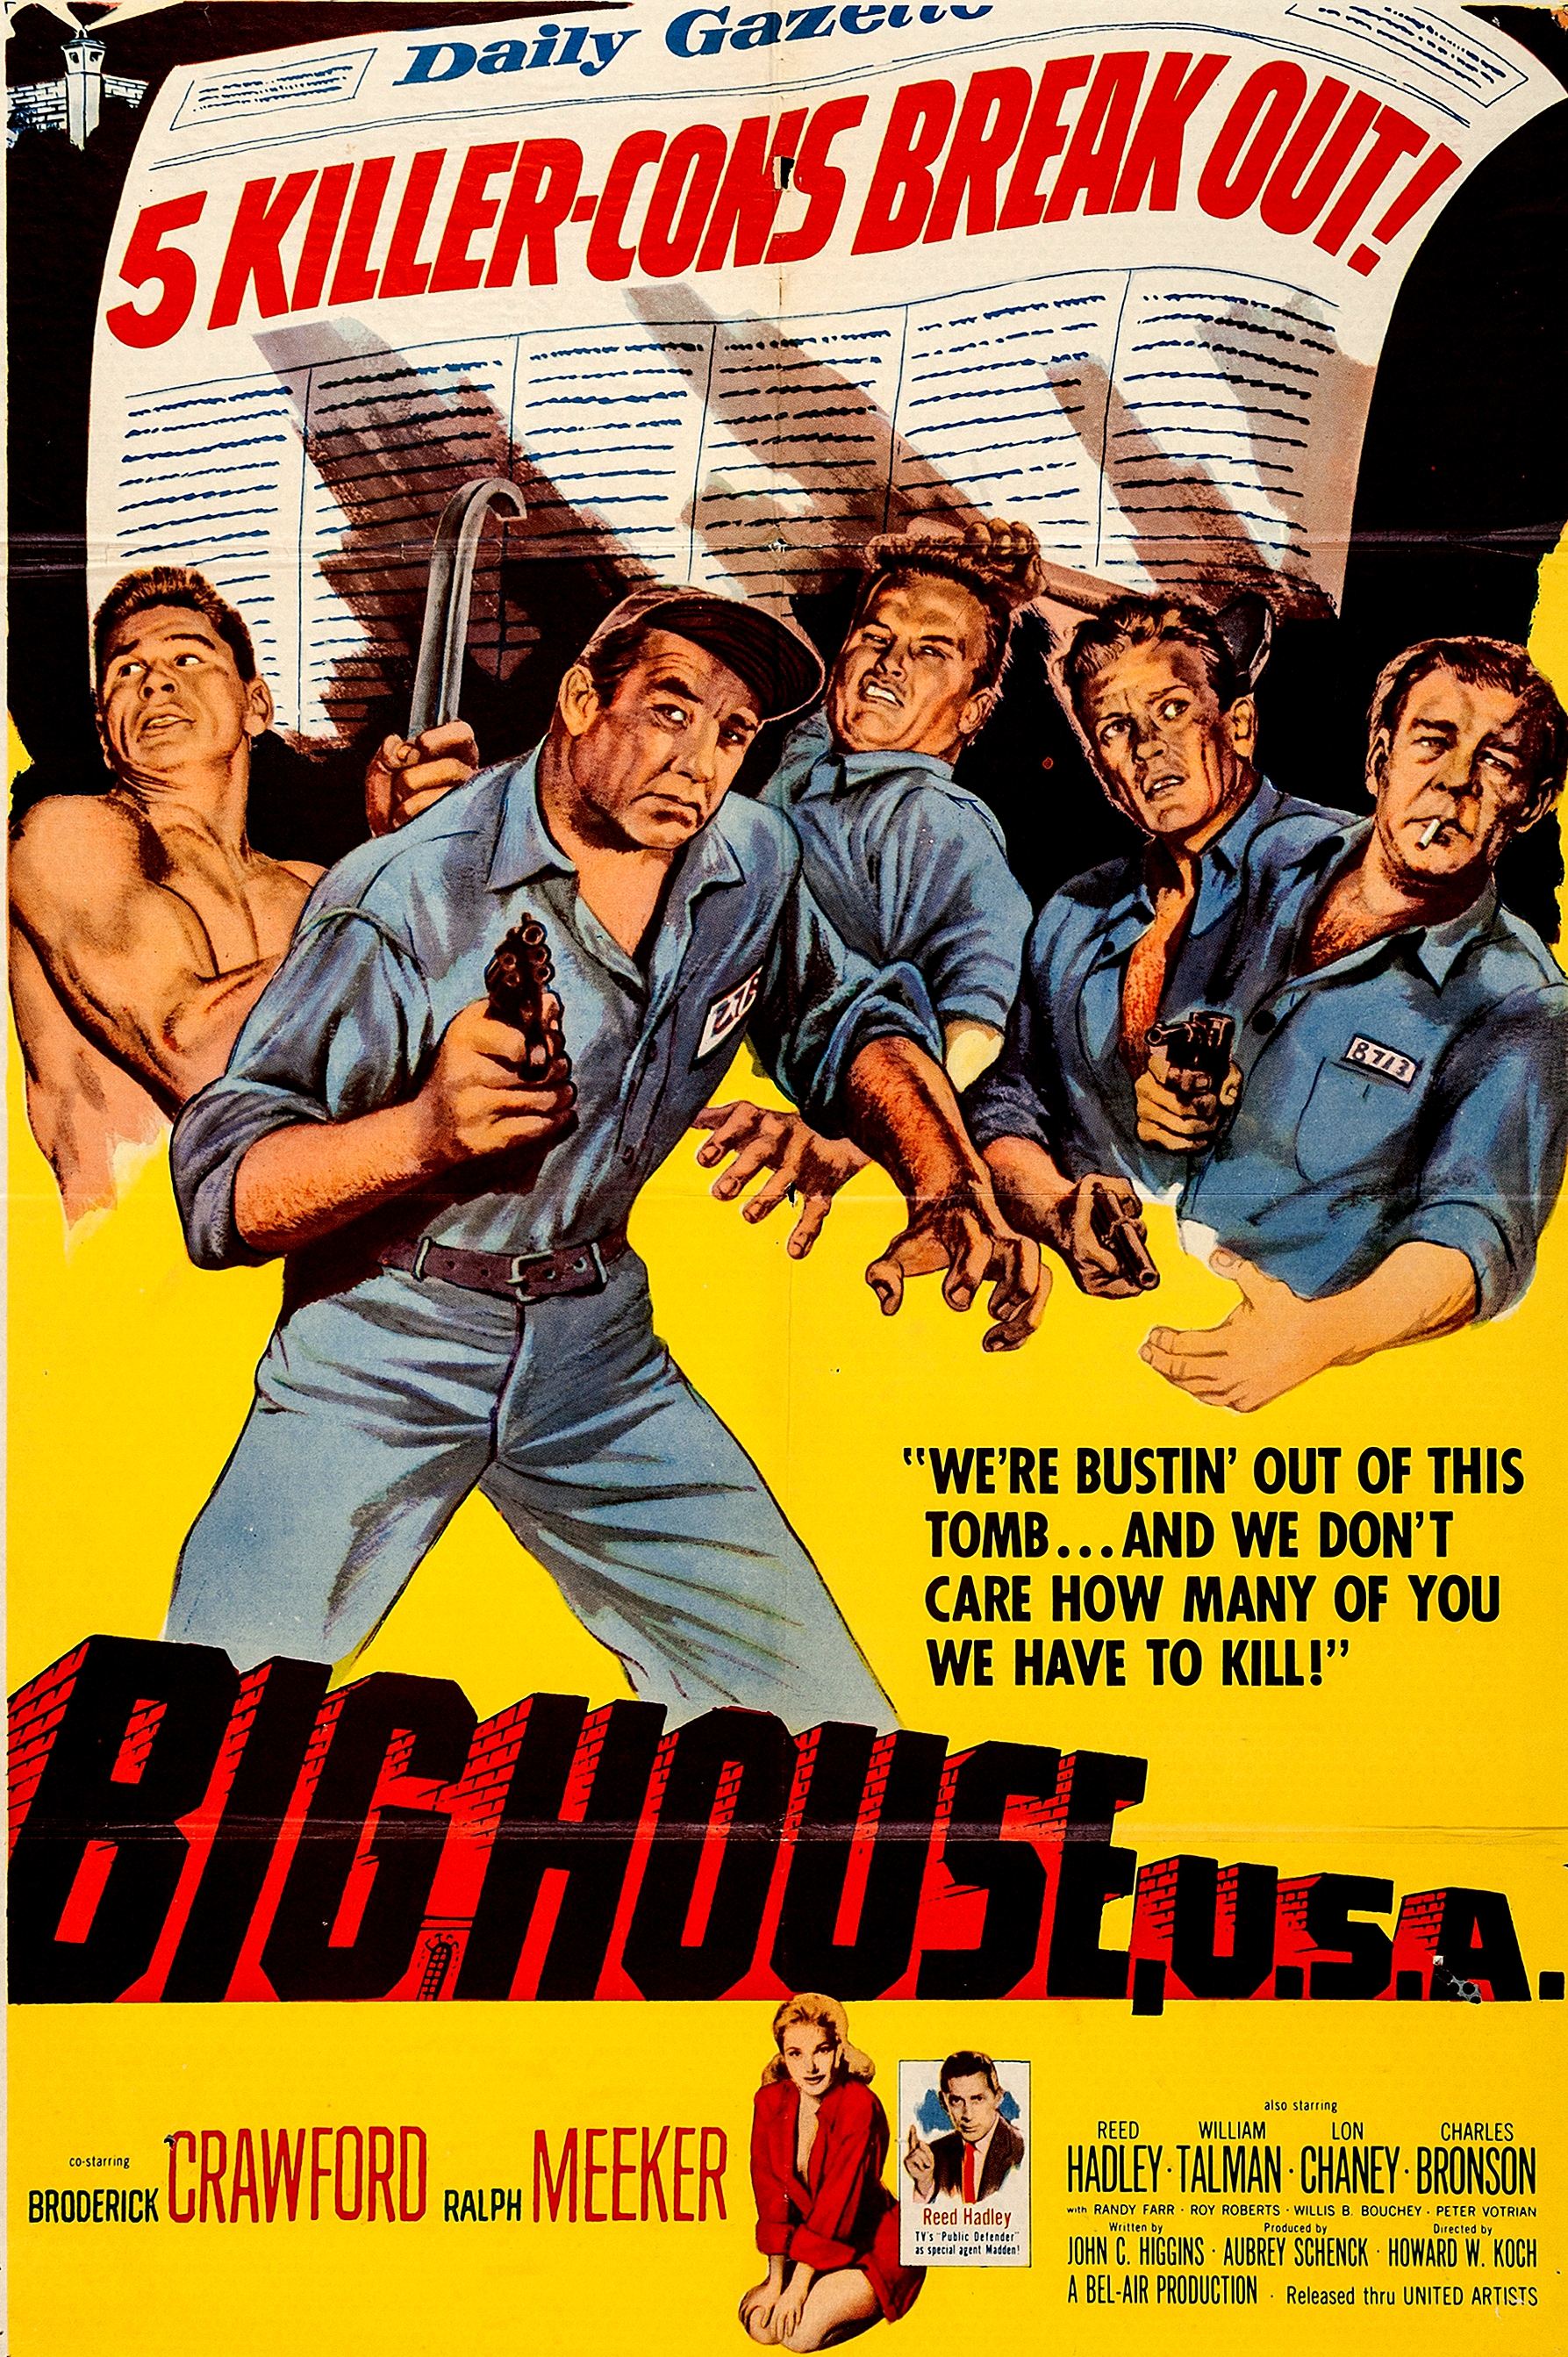 Big House, U.S.A. (1955) starring Broderick Crawford on DVD on DVD